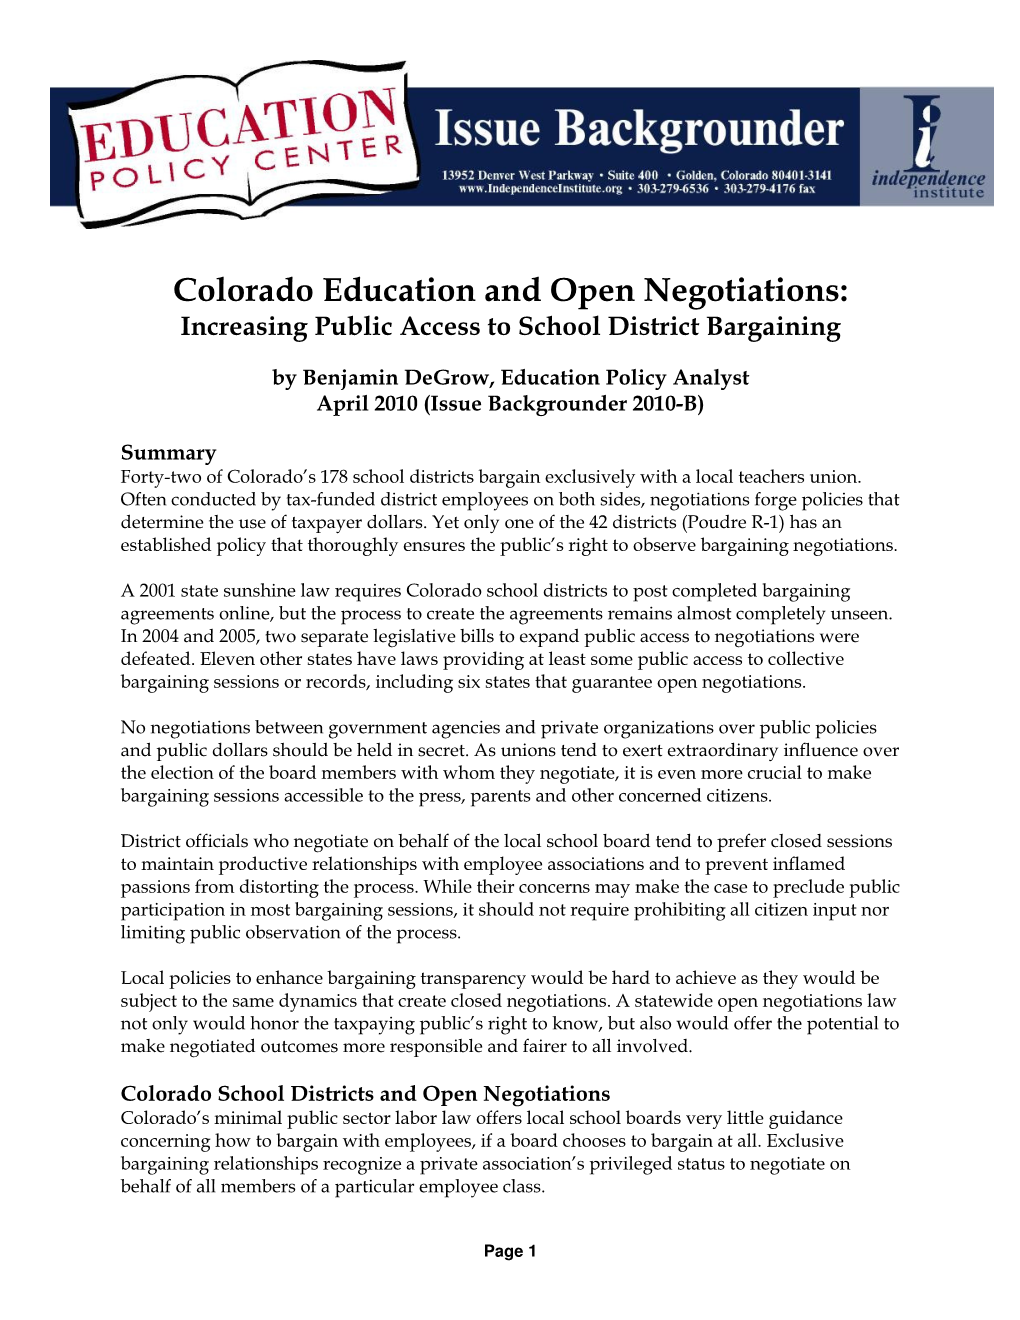 Colorado Education and Open Negotiations: Increasing Public Access to School District Bargaining